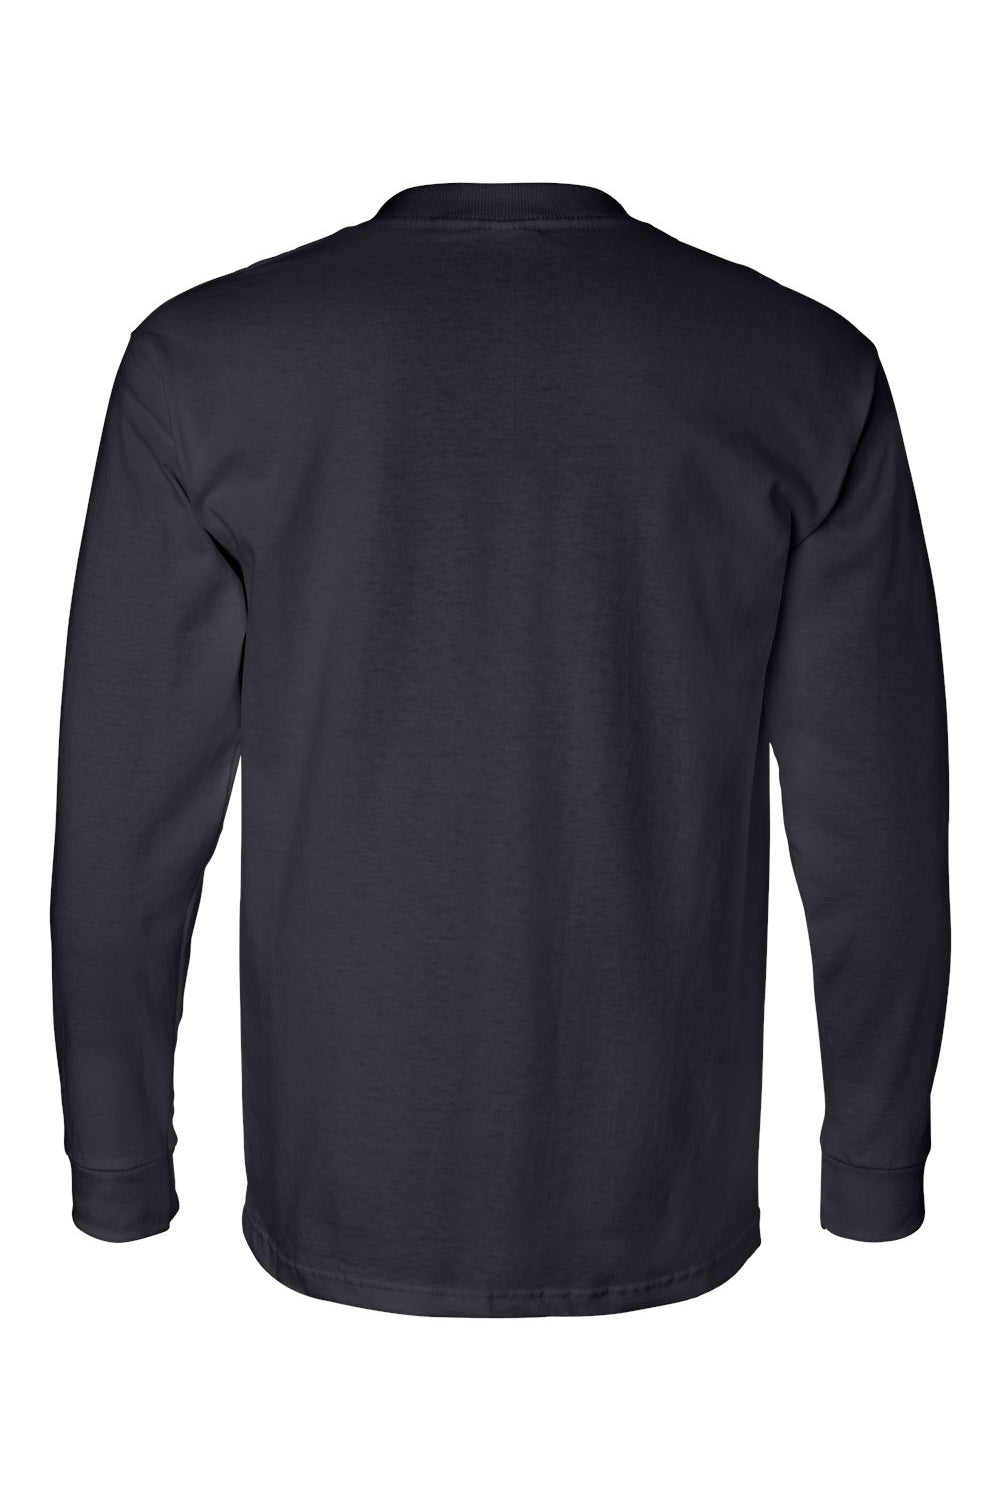 Bayside BA8100 Mens USA Made Long Sleeve Crewneck T-Shirt w/ Pocket Navy Blue Flat Back